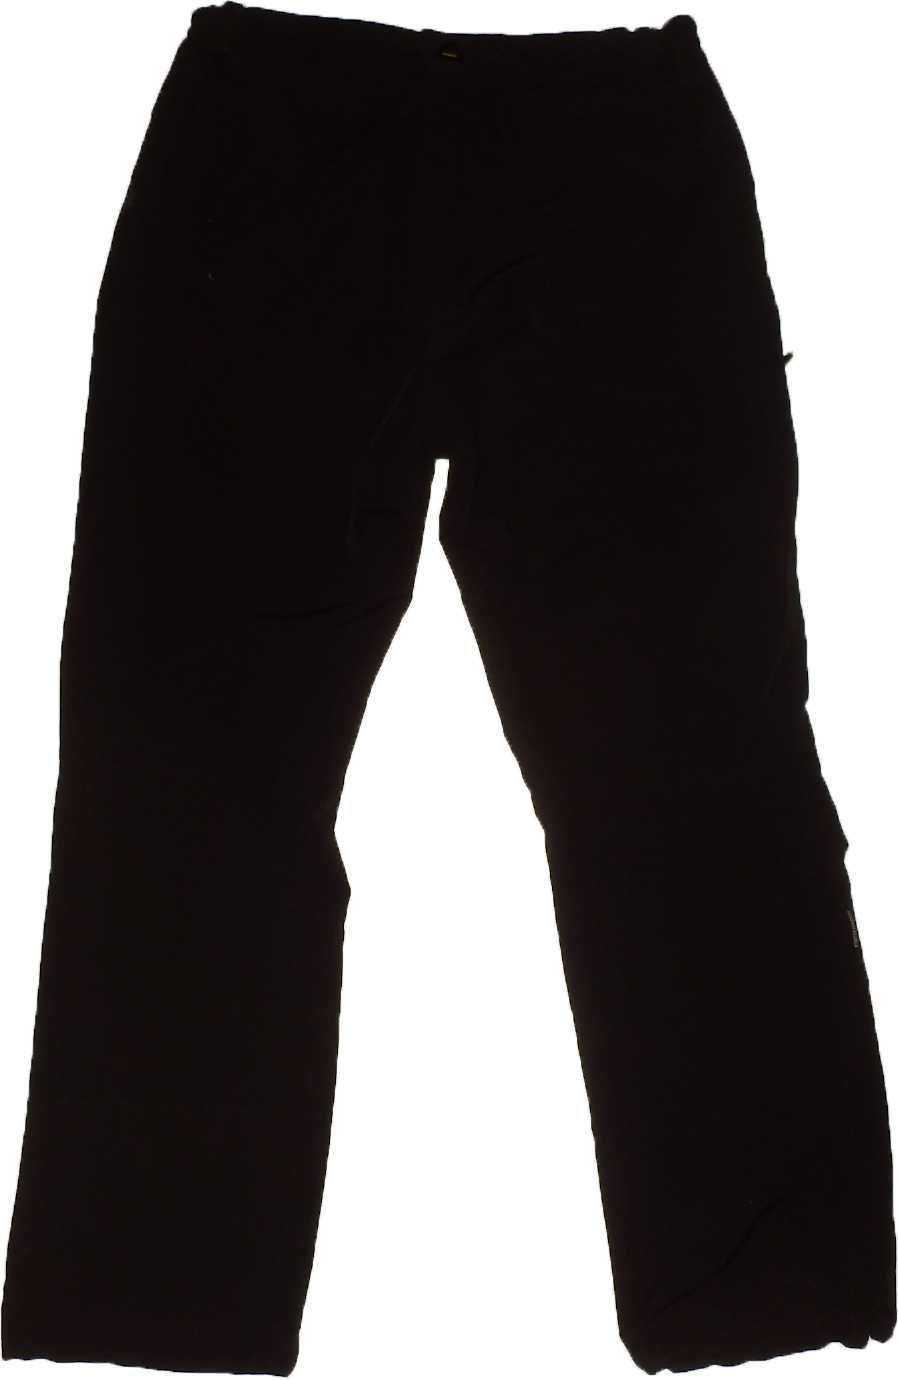 Pantaloni outdoor ICEPEAK Stretch Function (barbati L/XL) cod-557477